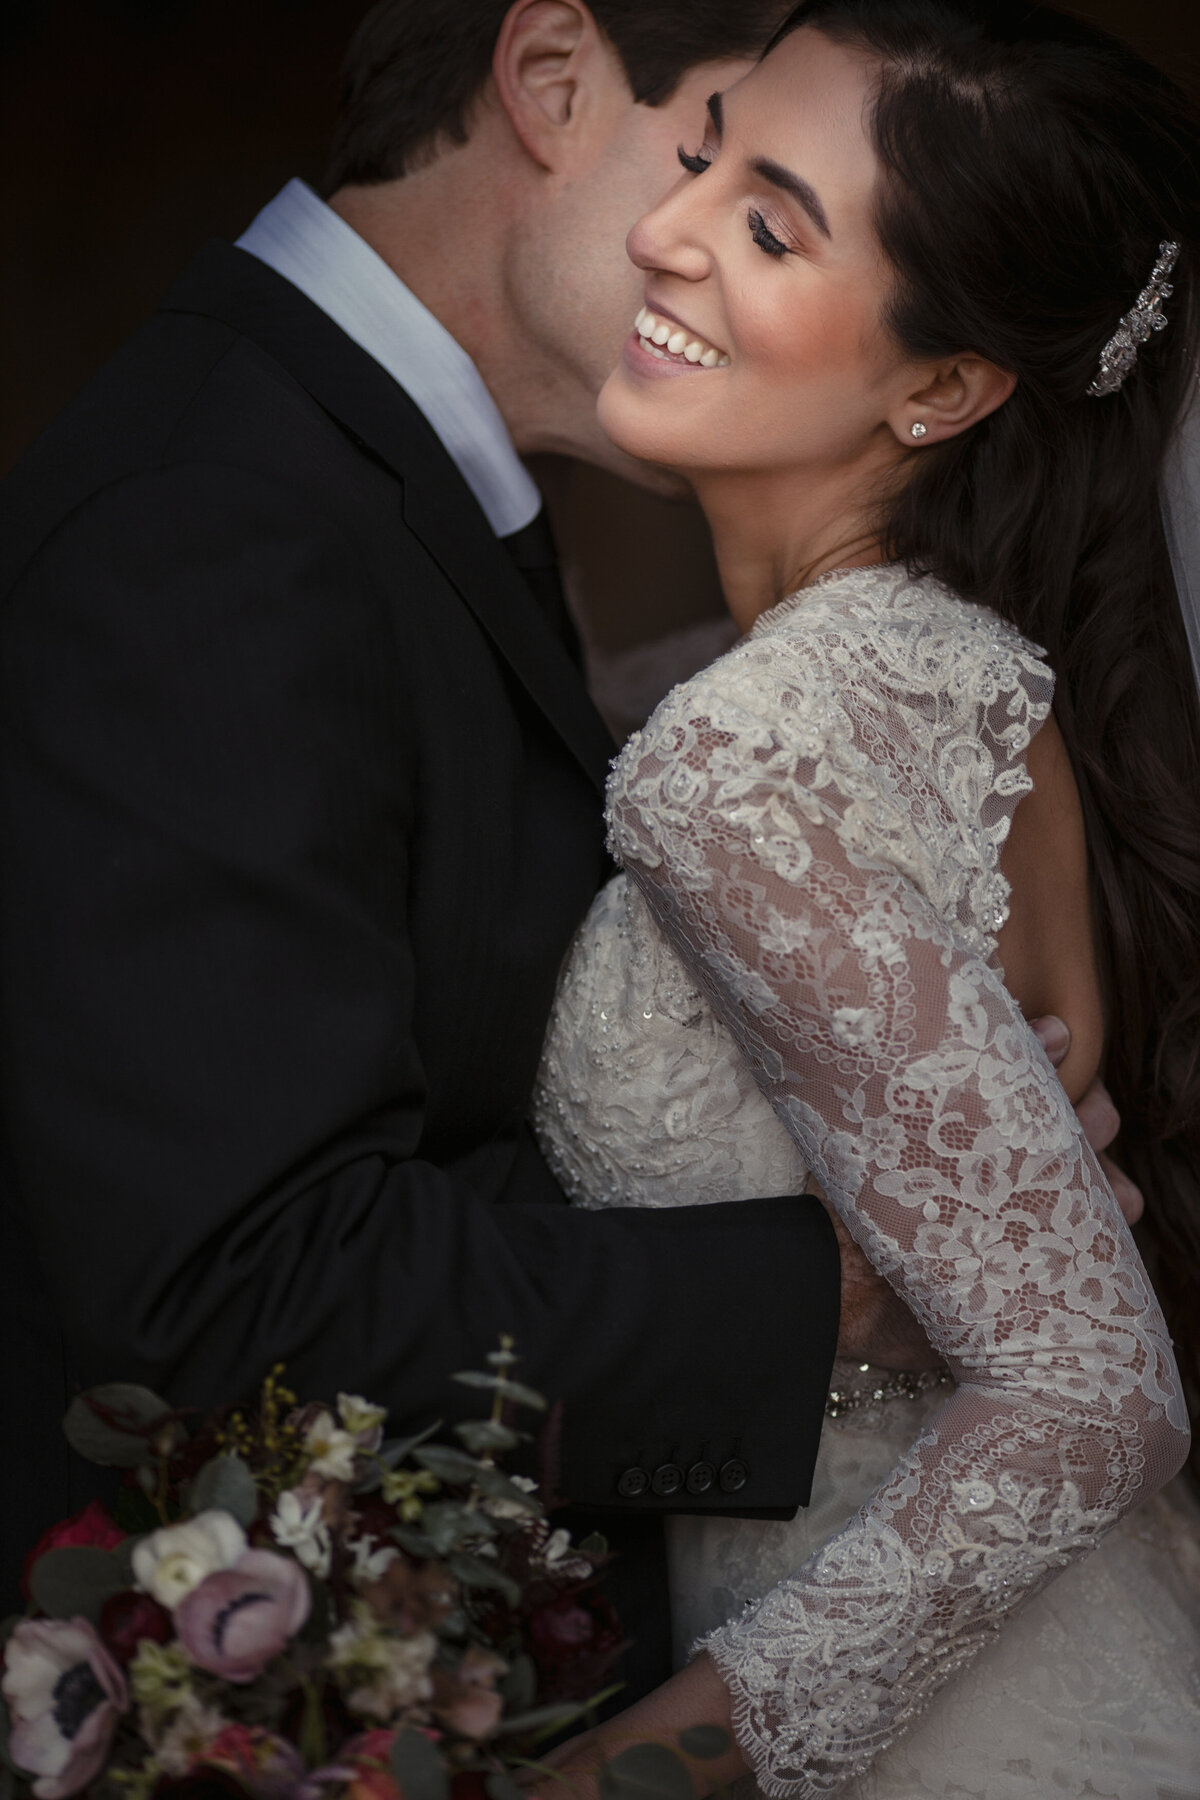 A groom kissing a bride's cheek as she smiles.